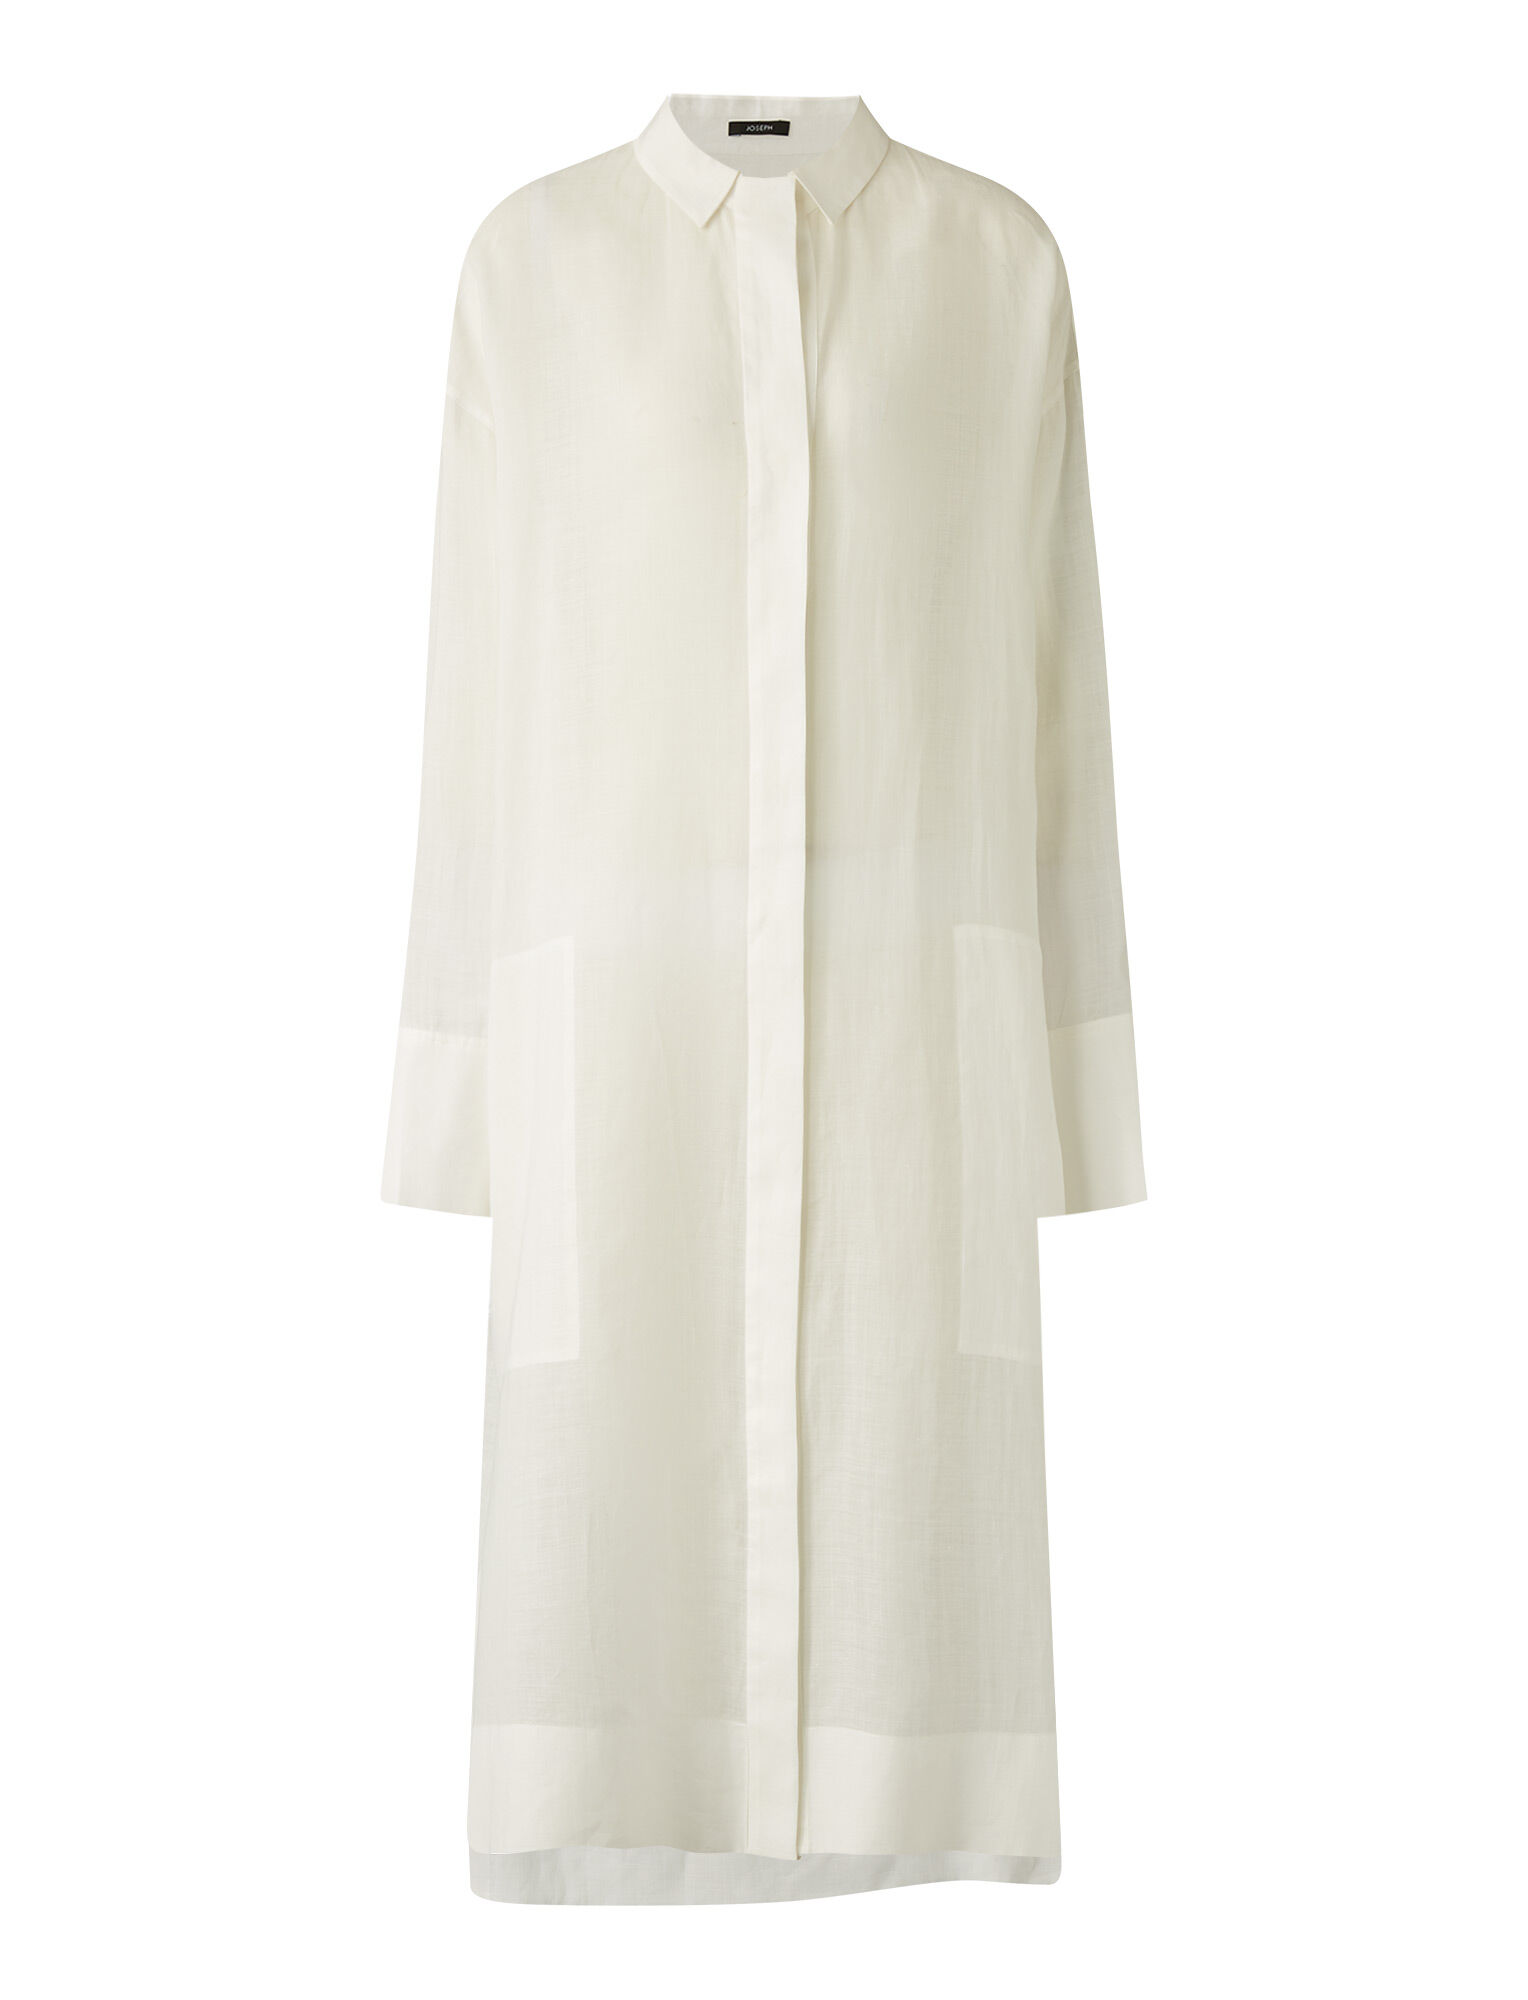 JOSEPH DAGA RAMIE VOILE DRESS,jf004890_0021-off white-42